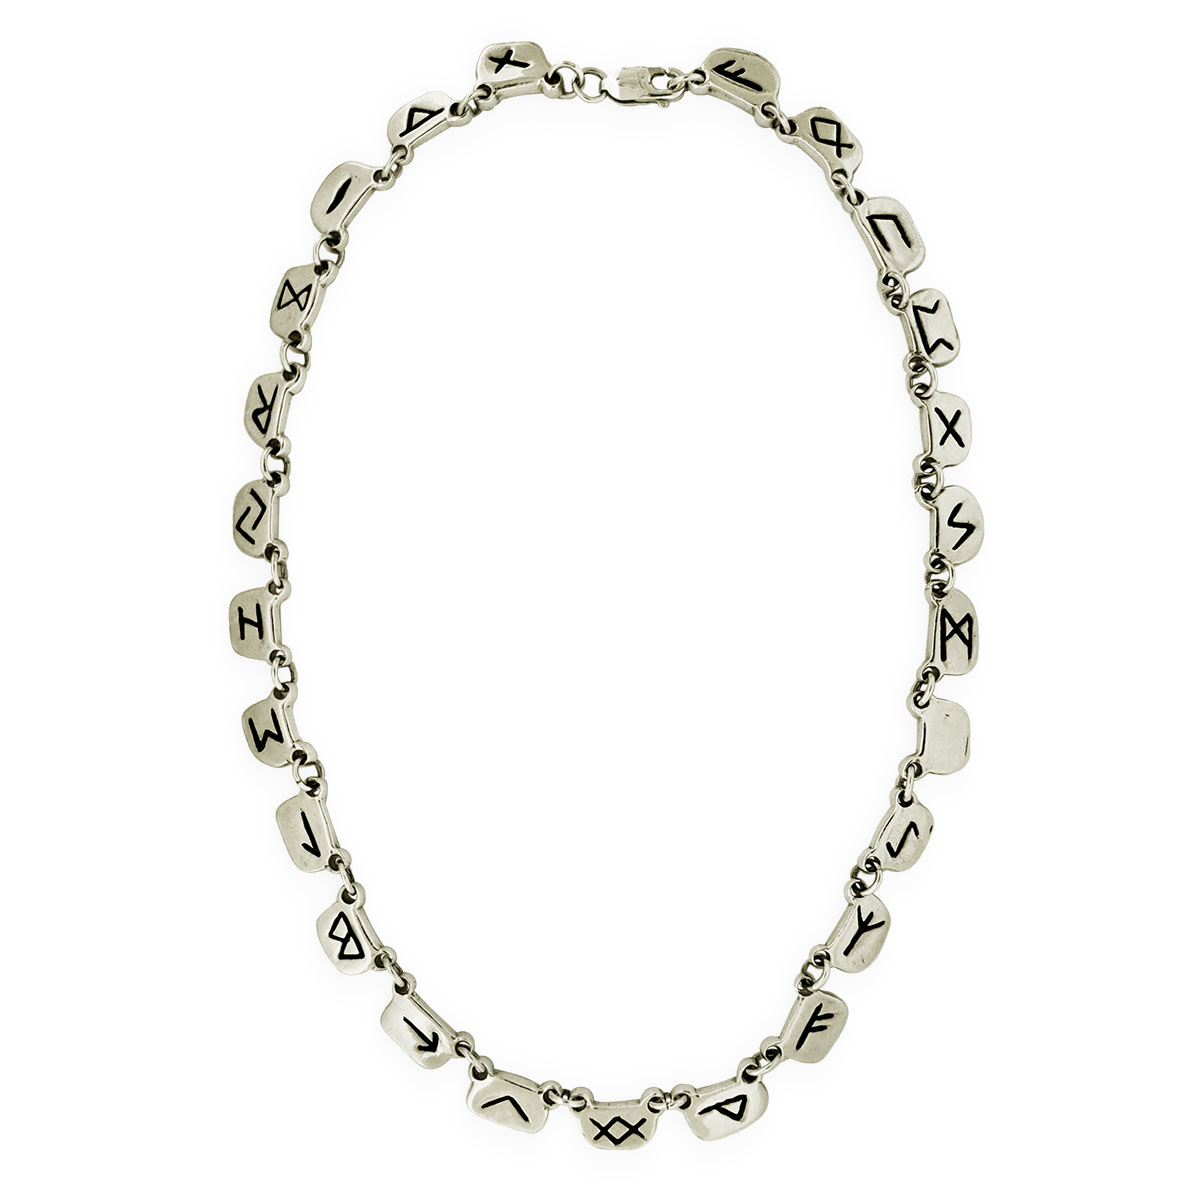 Spiritual Gift Idea - Large Silver Rune Necklace